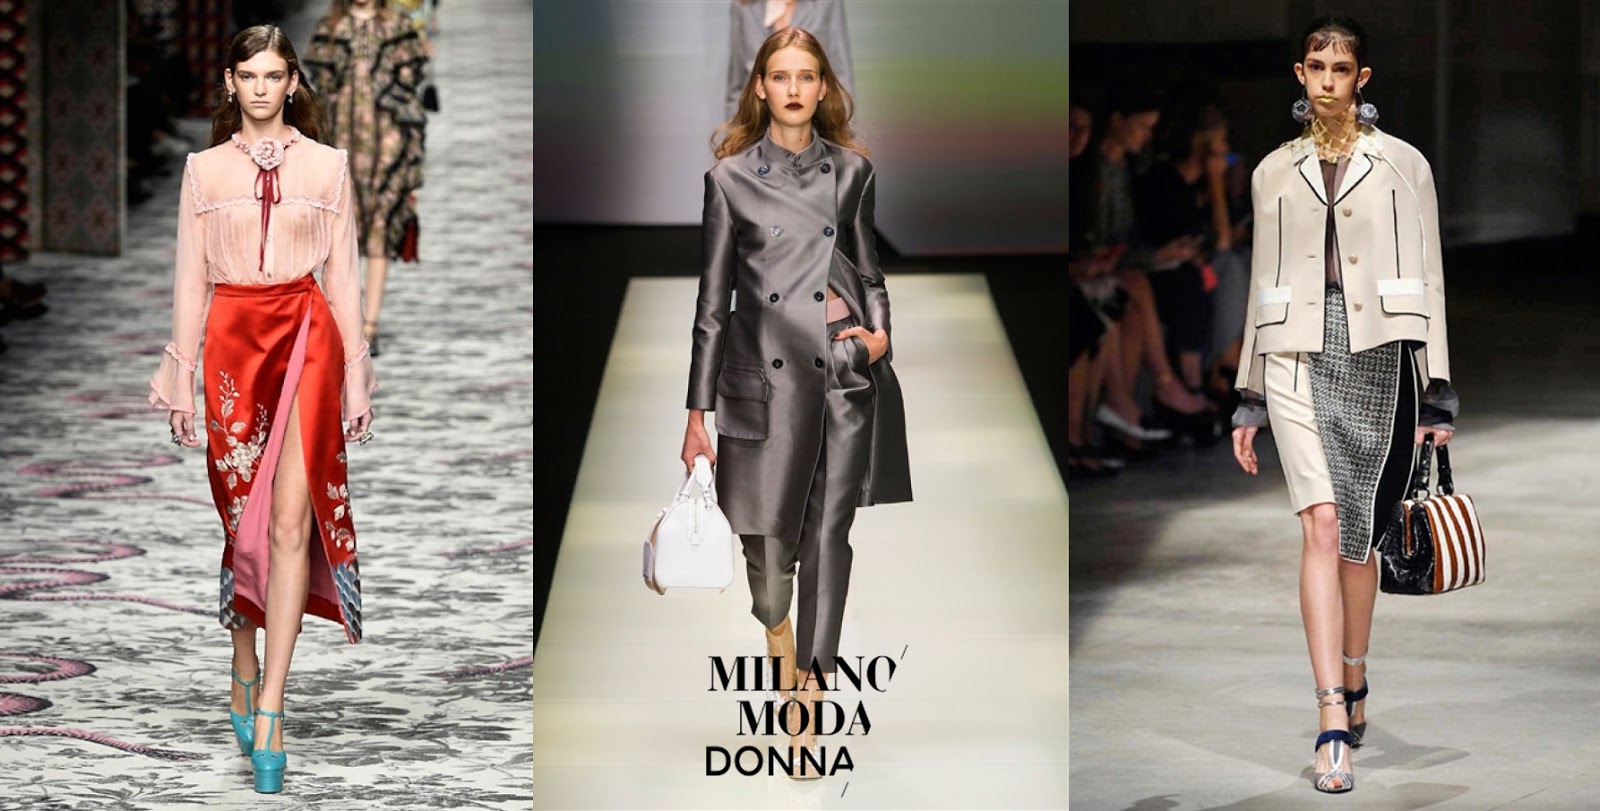 Eniwhere Fashion - Milano Fashion Week - Milano Moda Donna